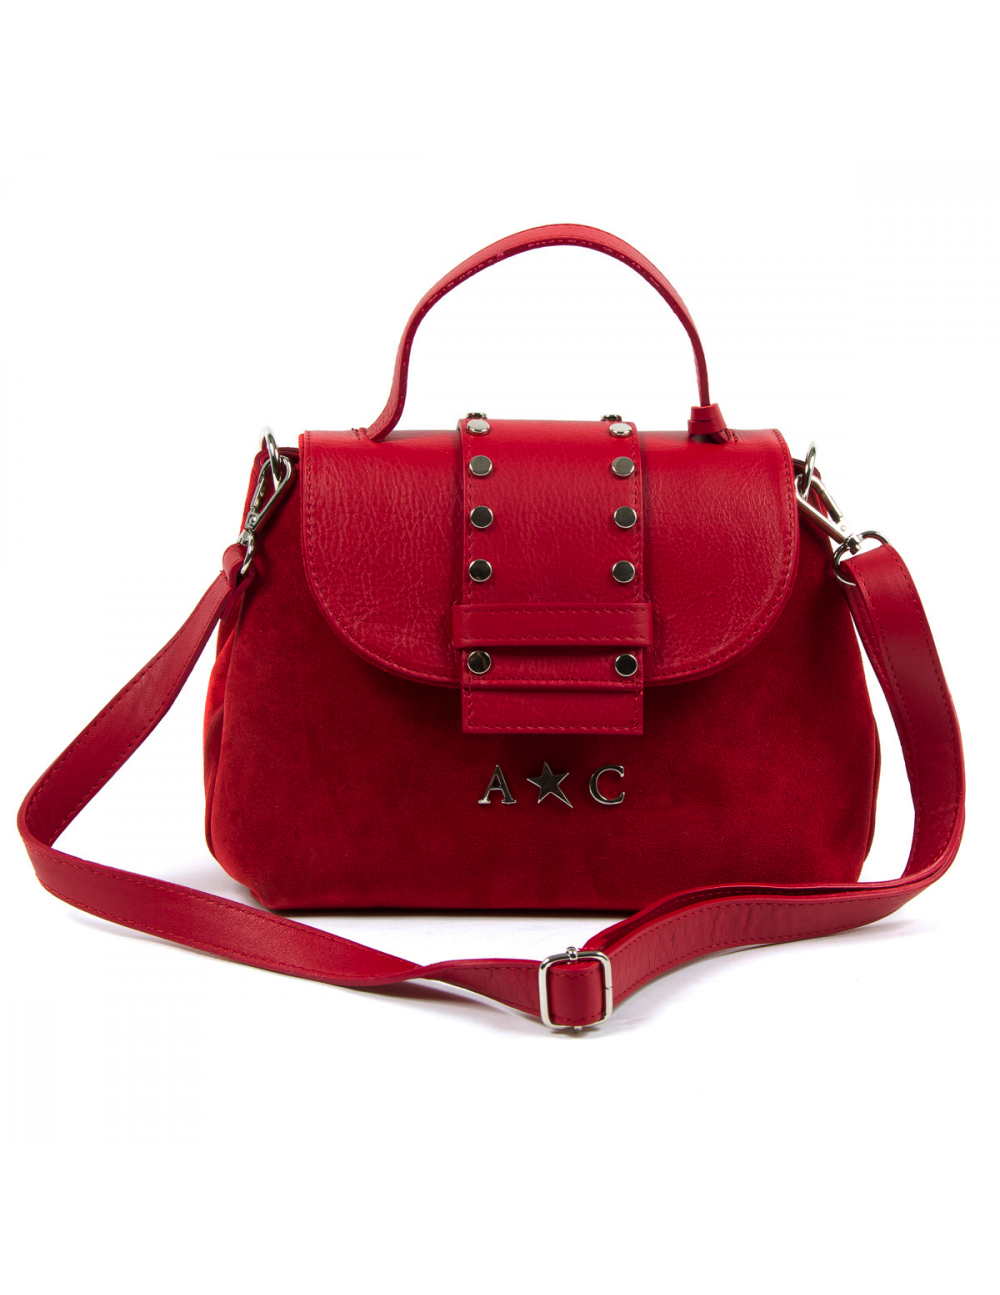 Andrew Charles Womens Handbag Red PAMELA - YuppyCollections